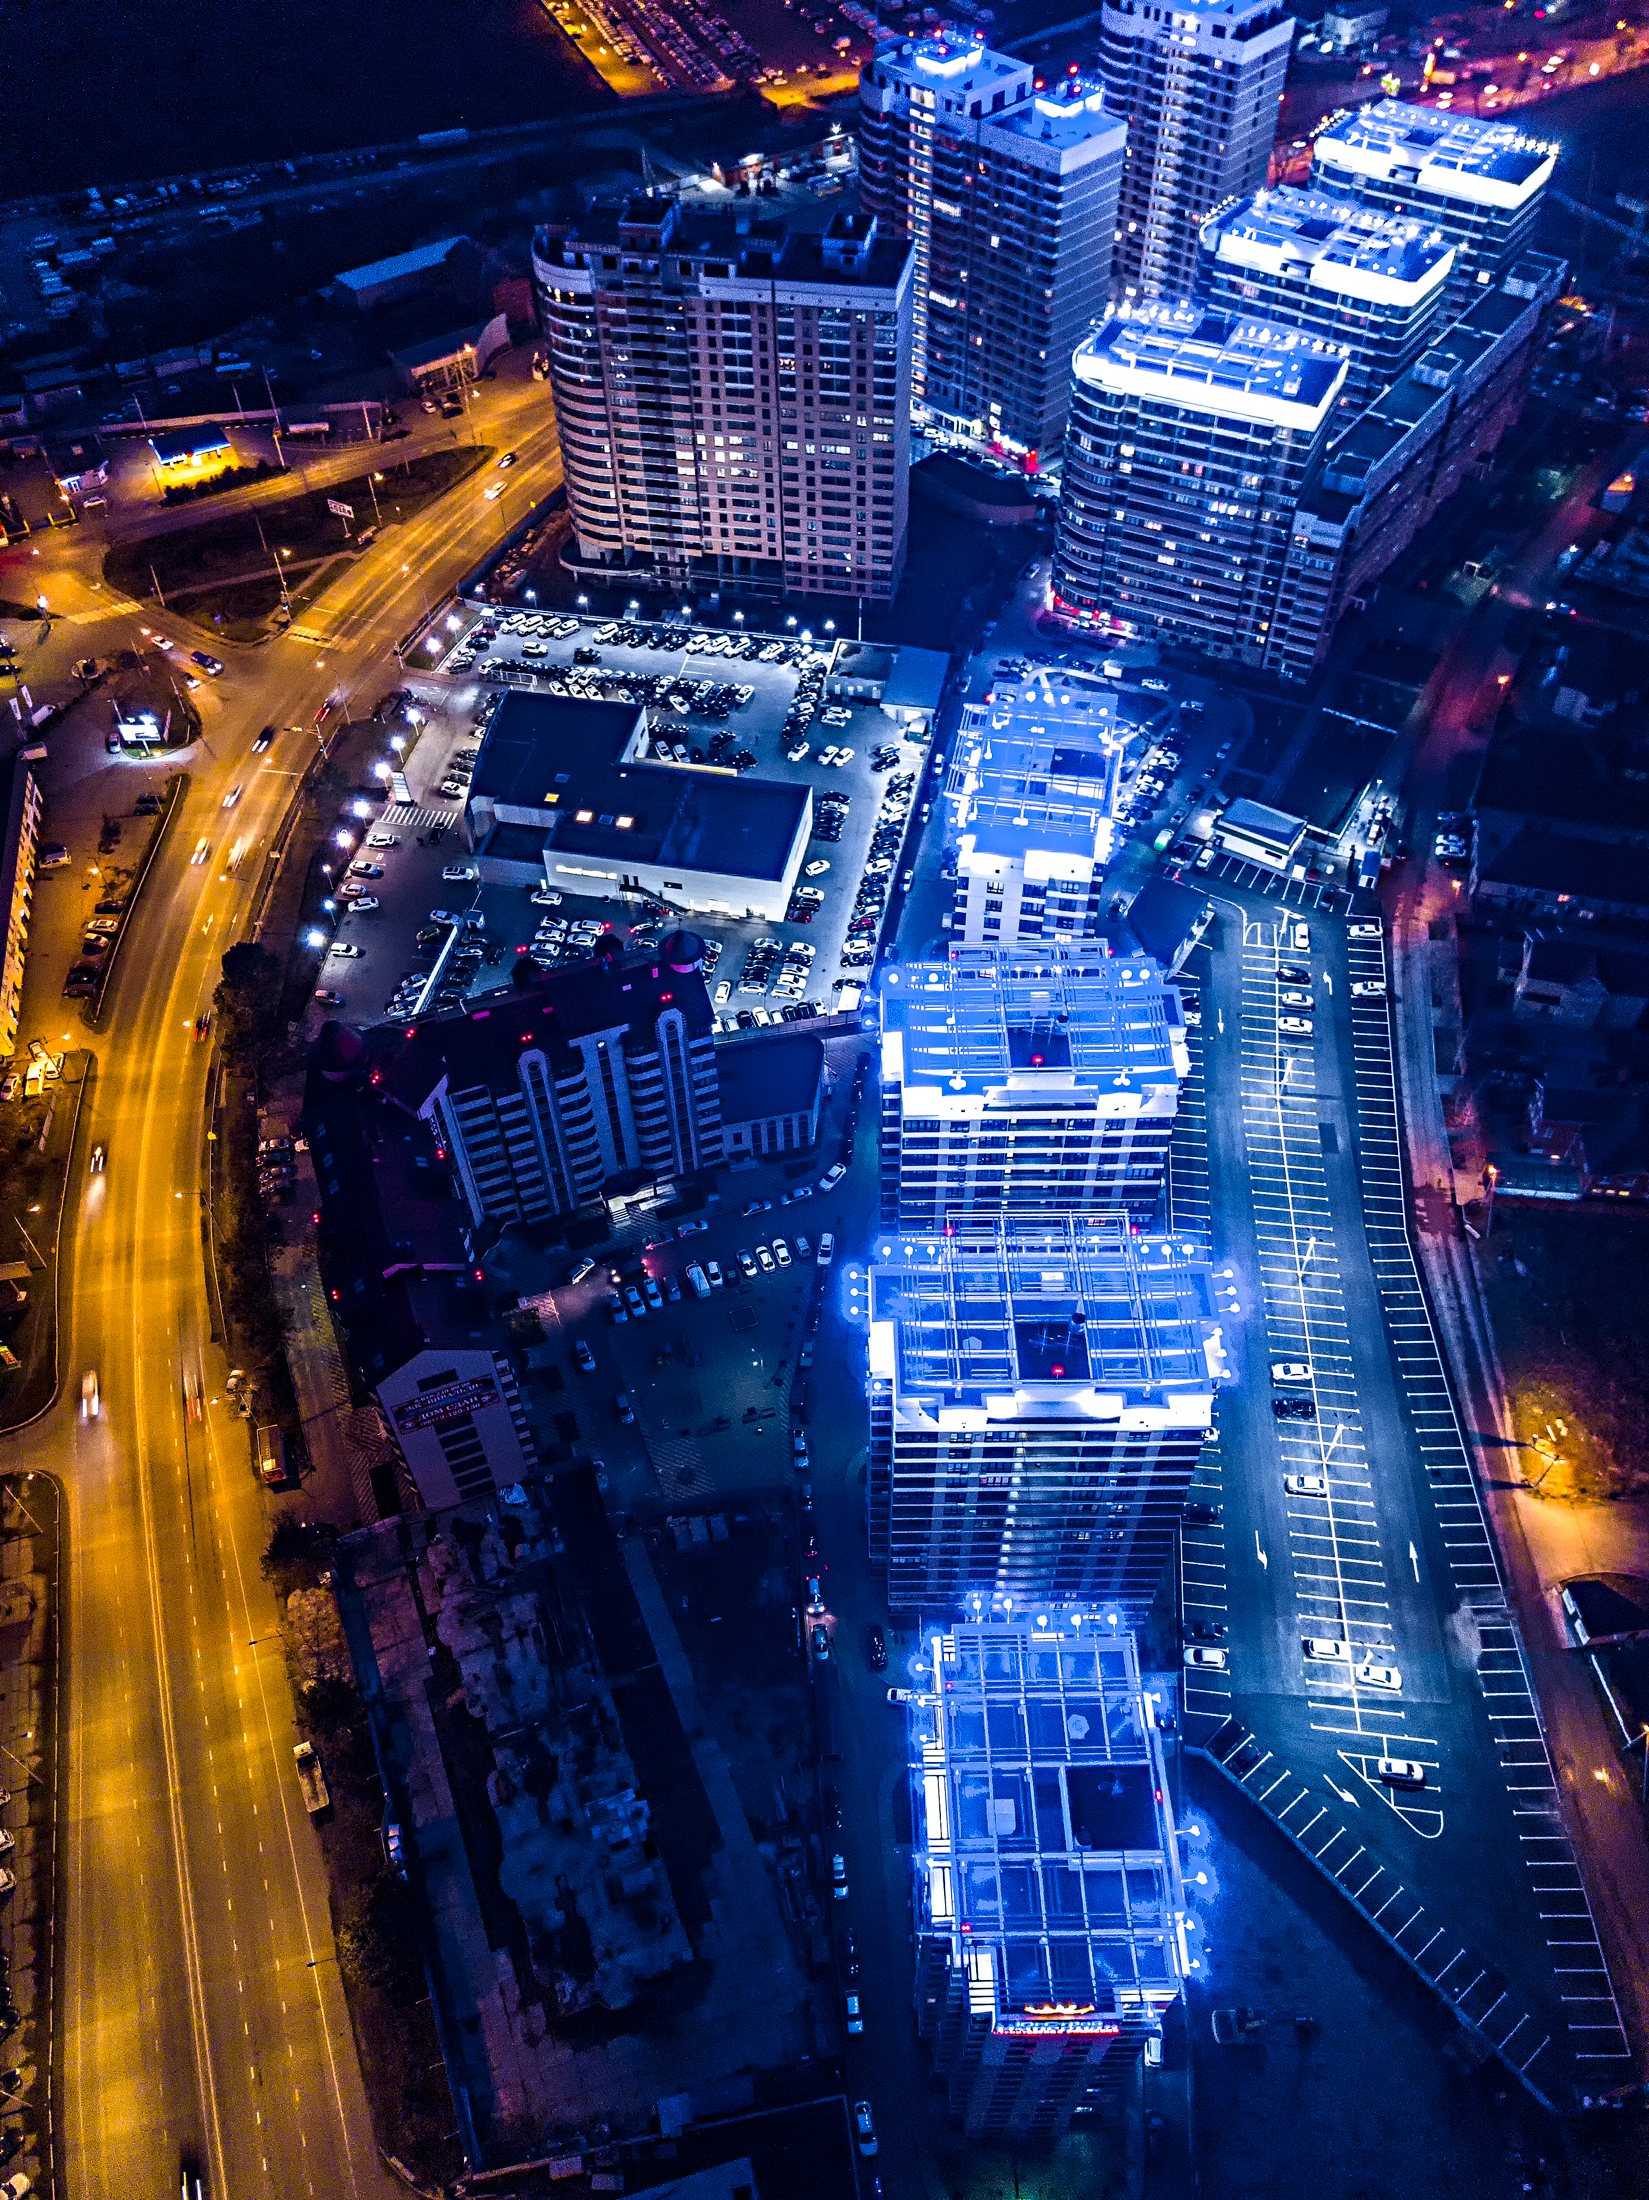 Вечерний Краснодар - Фото с высоты птичьего полета, съемка с квадрокоптера - PilotHub